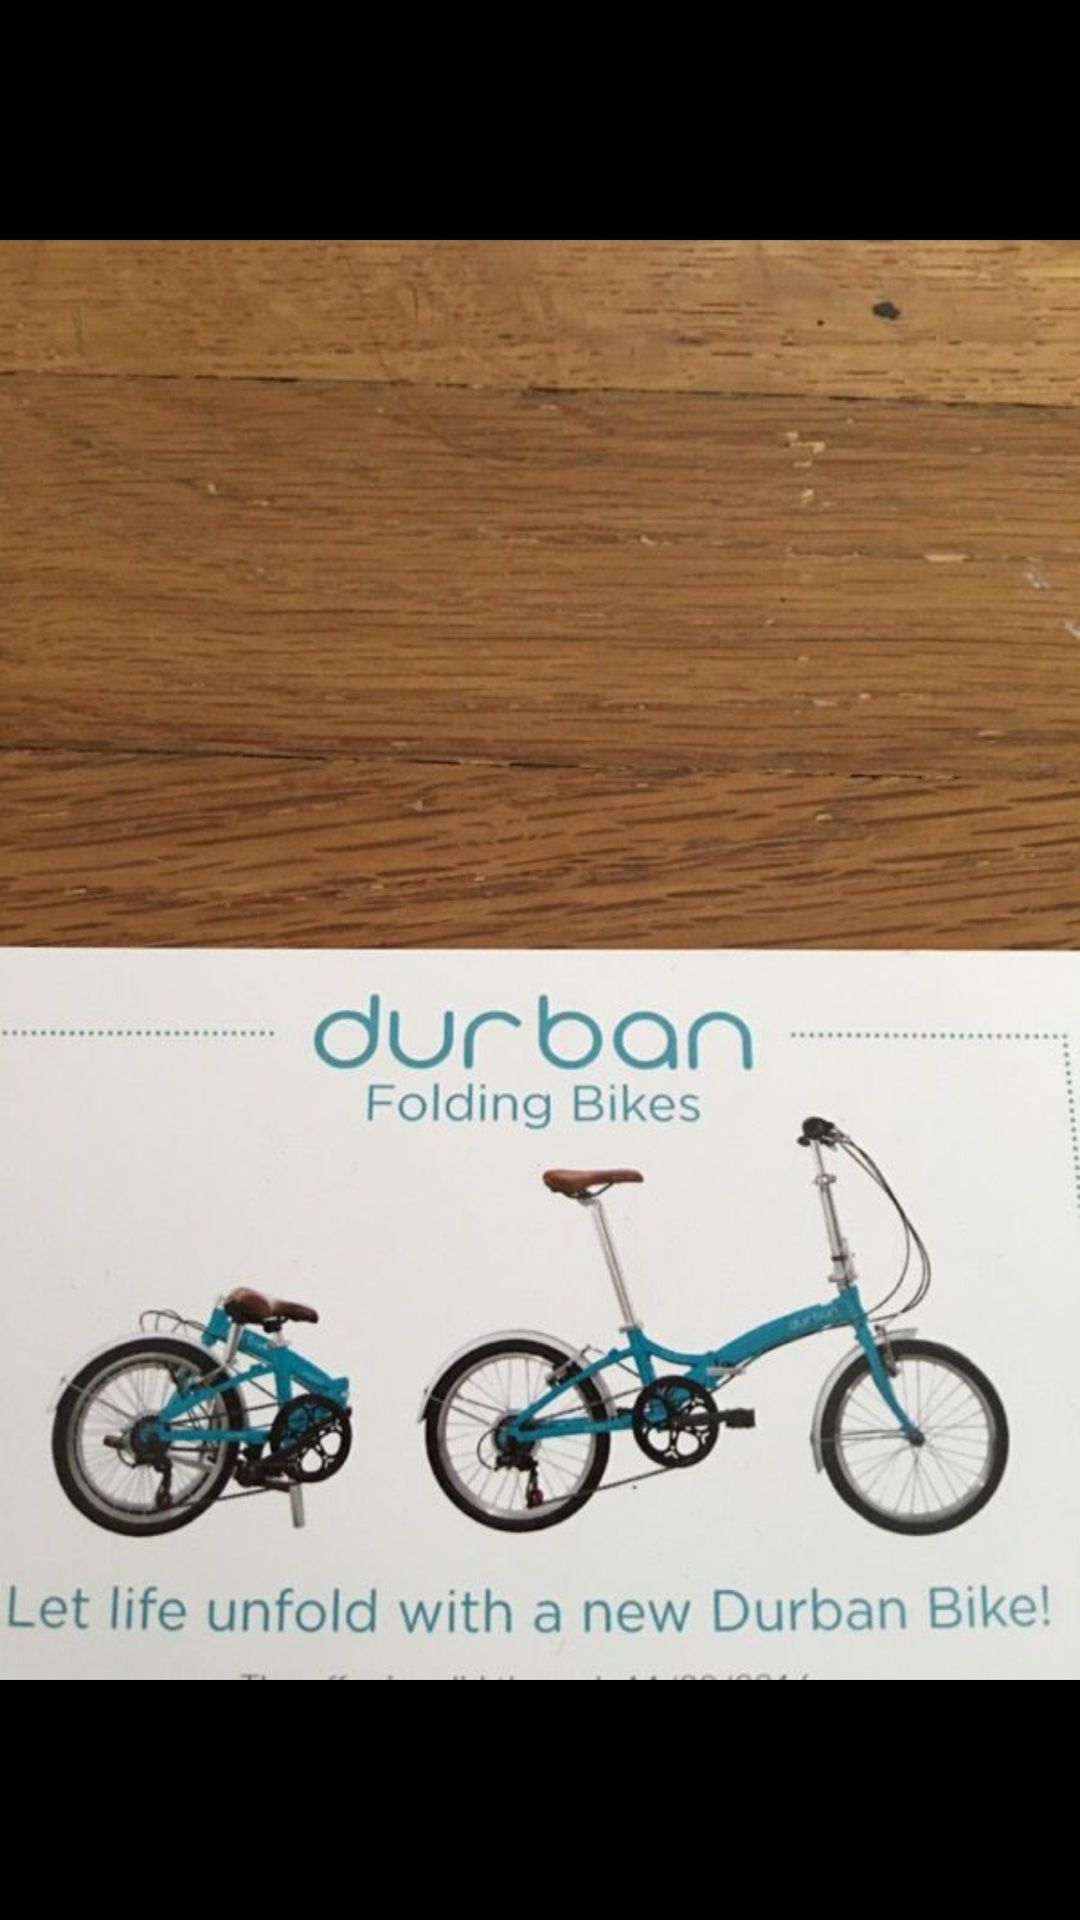 Durban folding bike